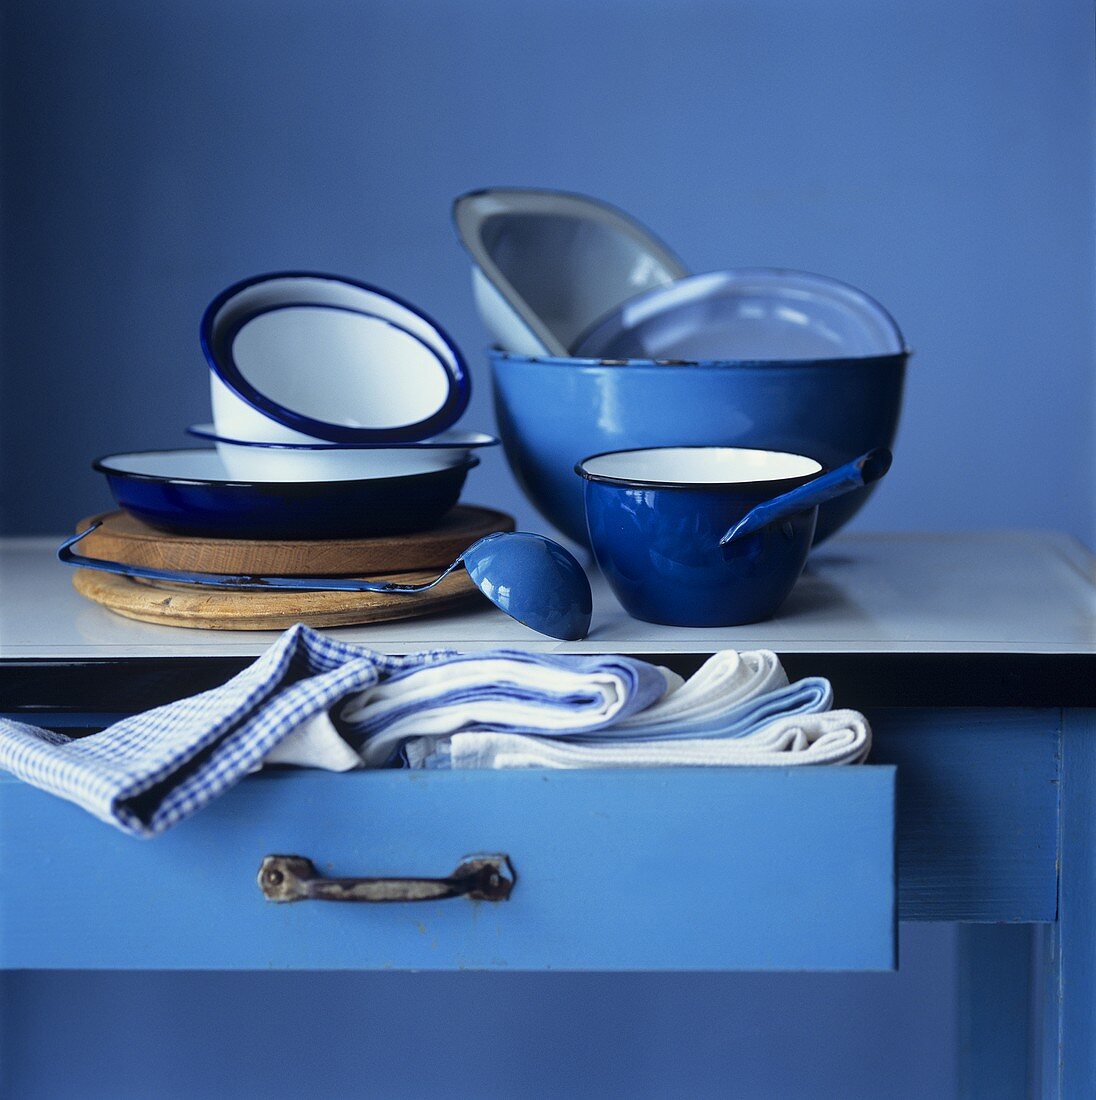 Kitchen utensils in blue and white